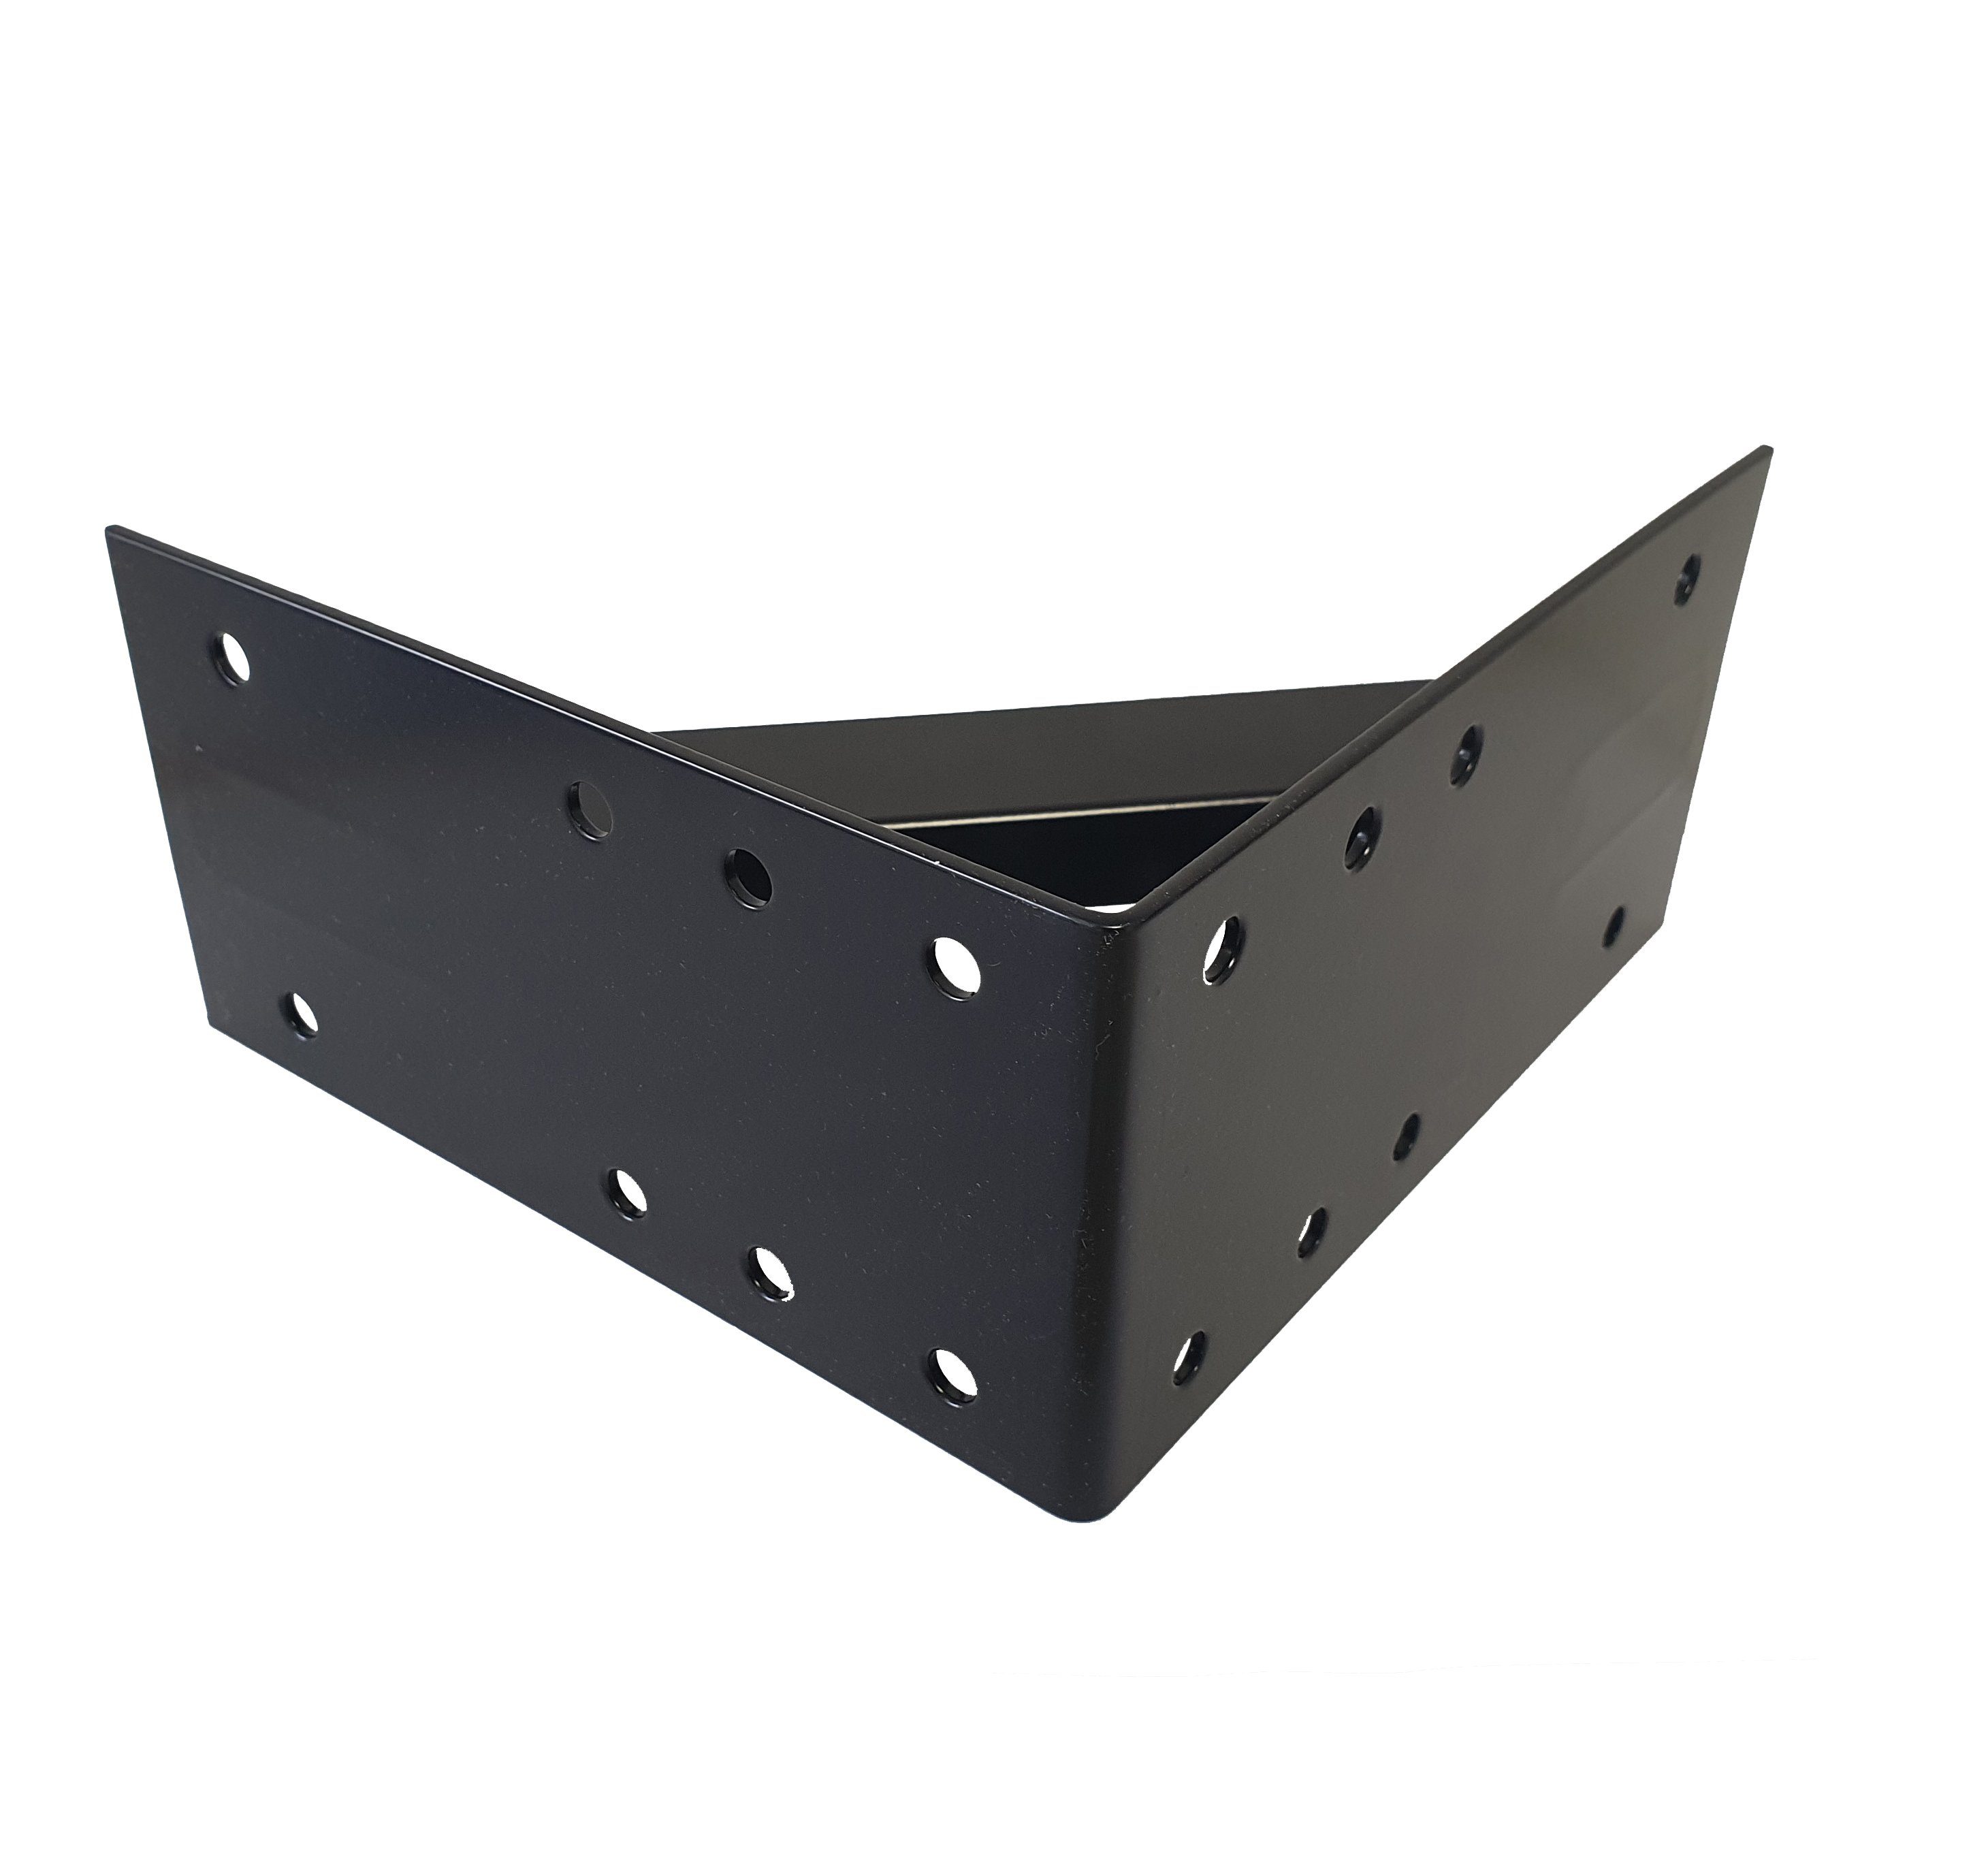 Stahl Holzverbinder Winkel verstärkt stark schwarz Holzkonstruktionsbeschlag, 25x25x10 dynamic24 extra